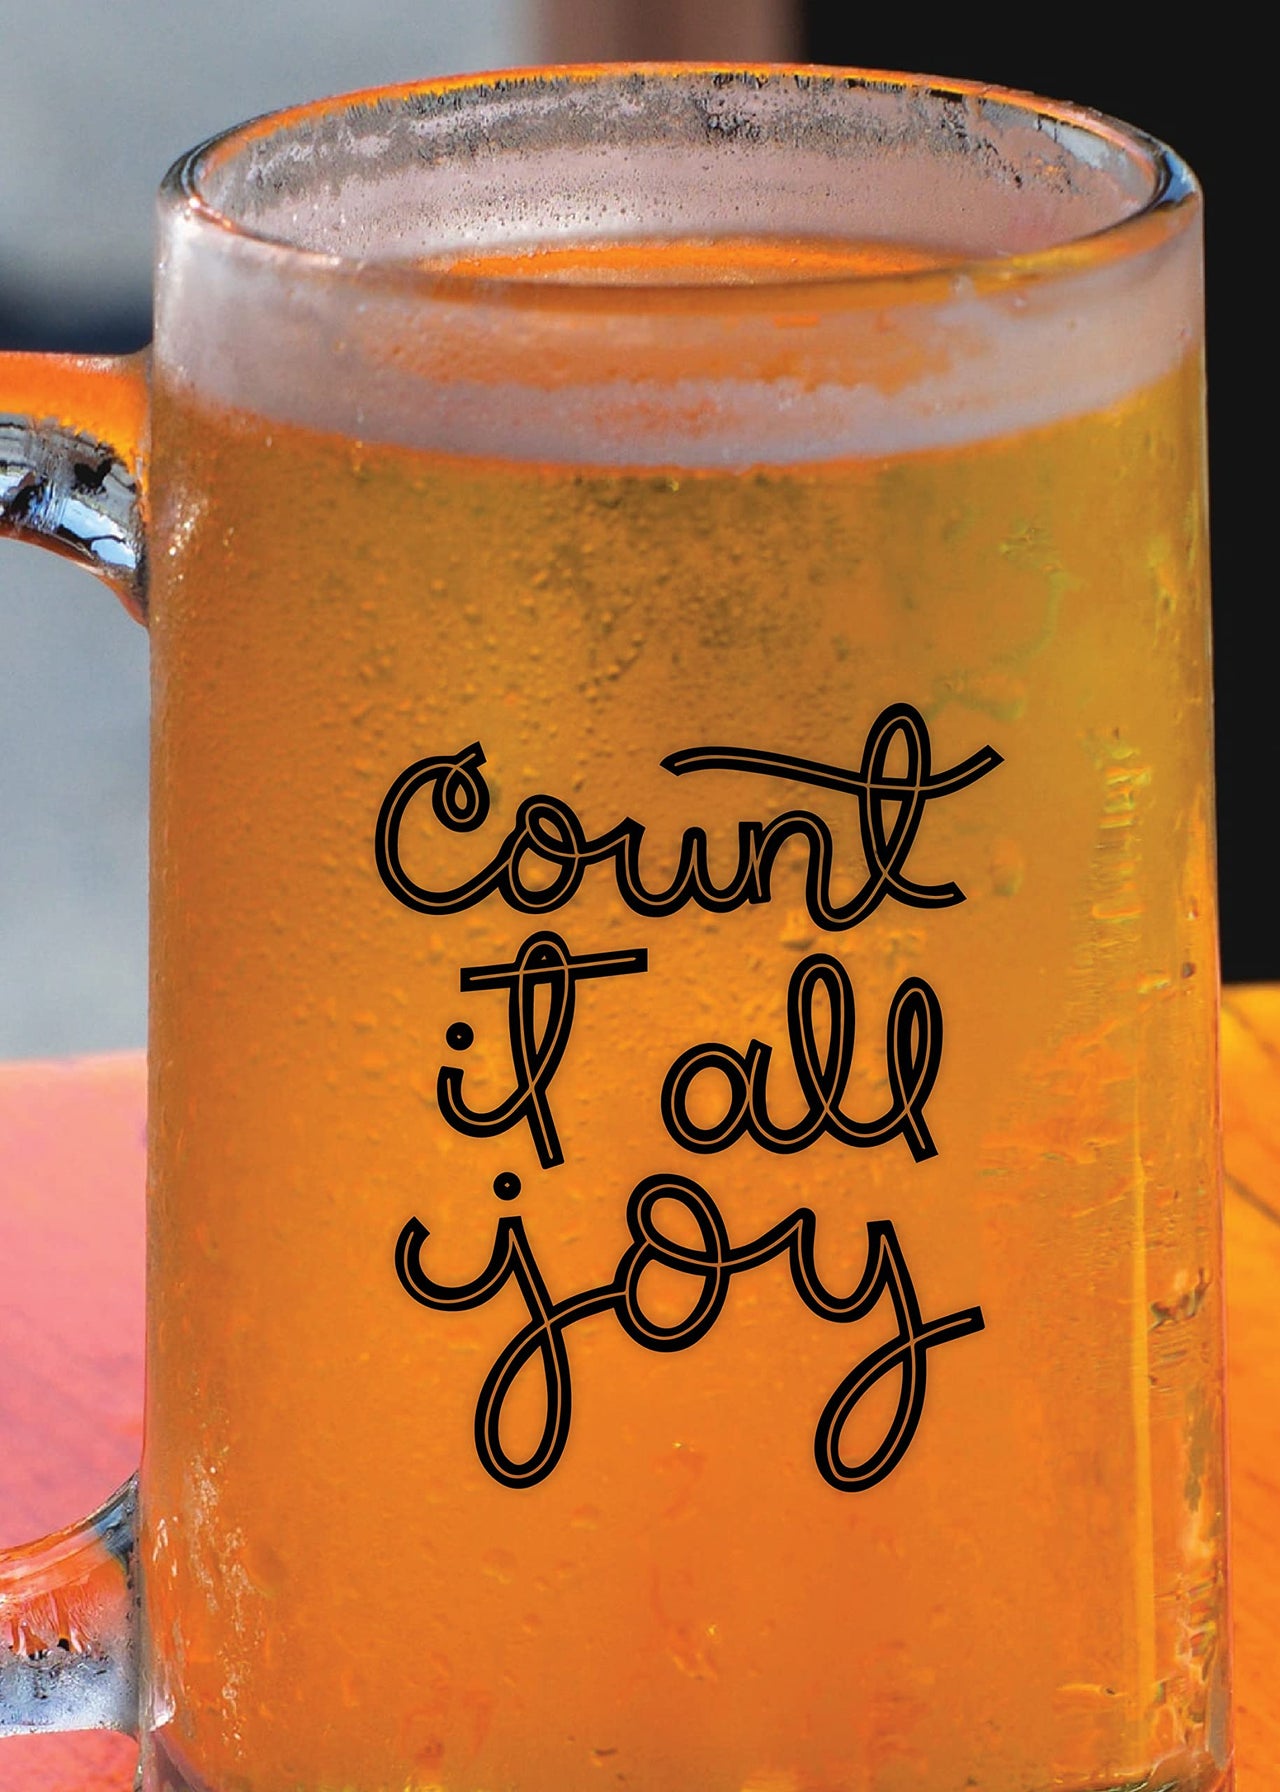 Count It All Joy-Beer Mug -1 Piece Clear, 500 ml -Transparent Glass Beer Mug - Printed Beer Mug with Handle